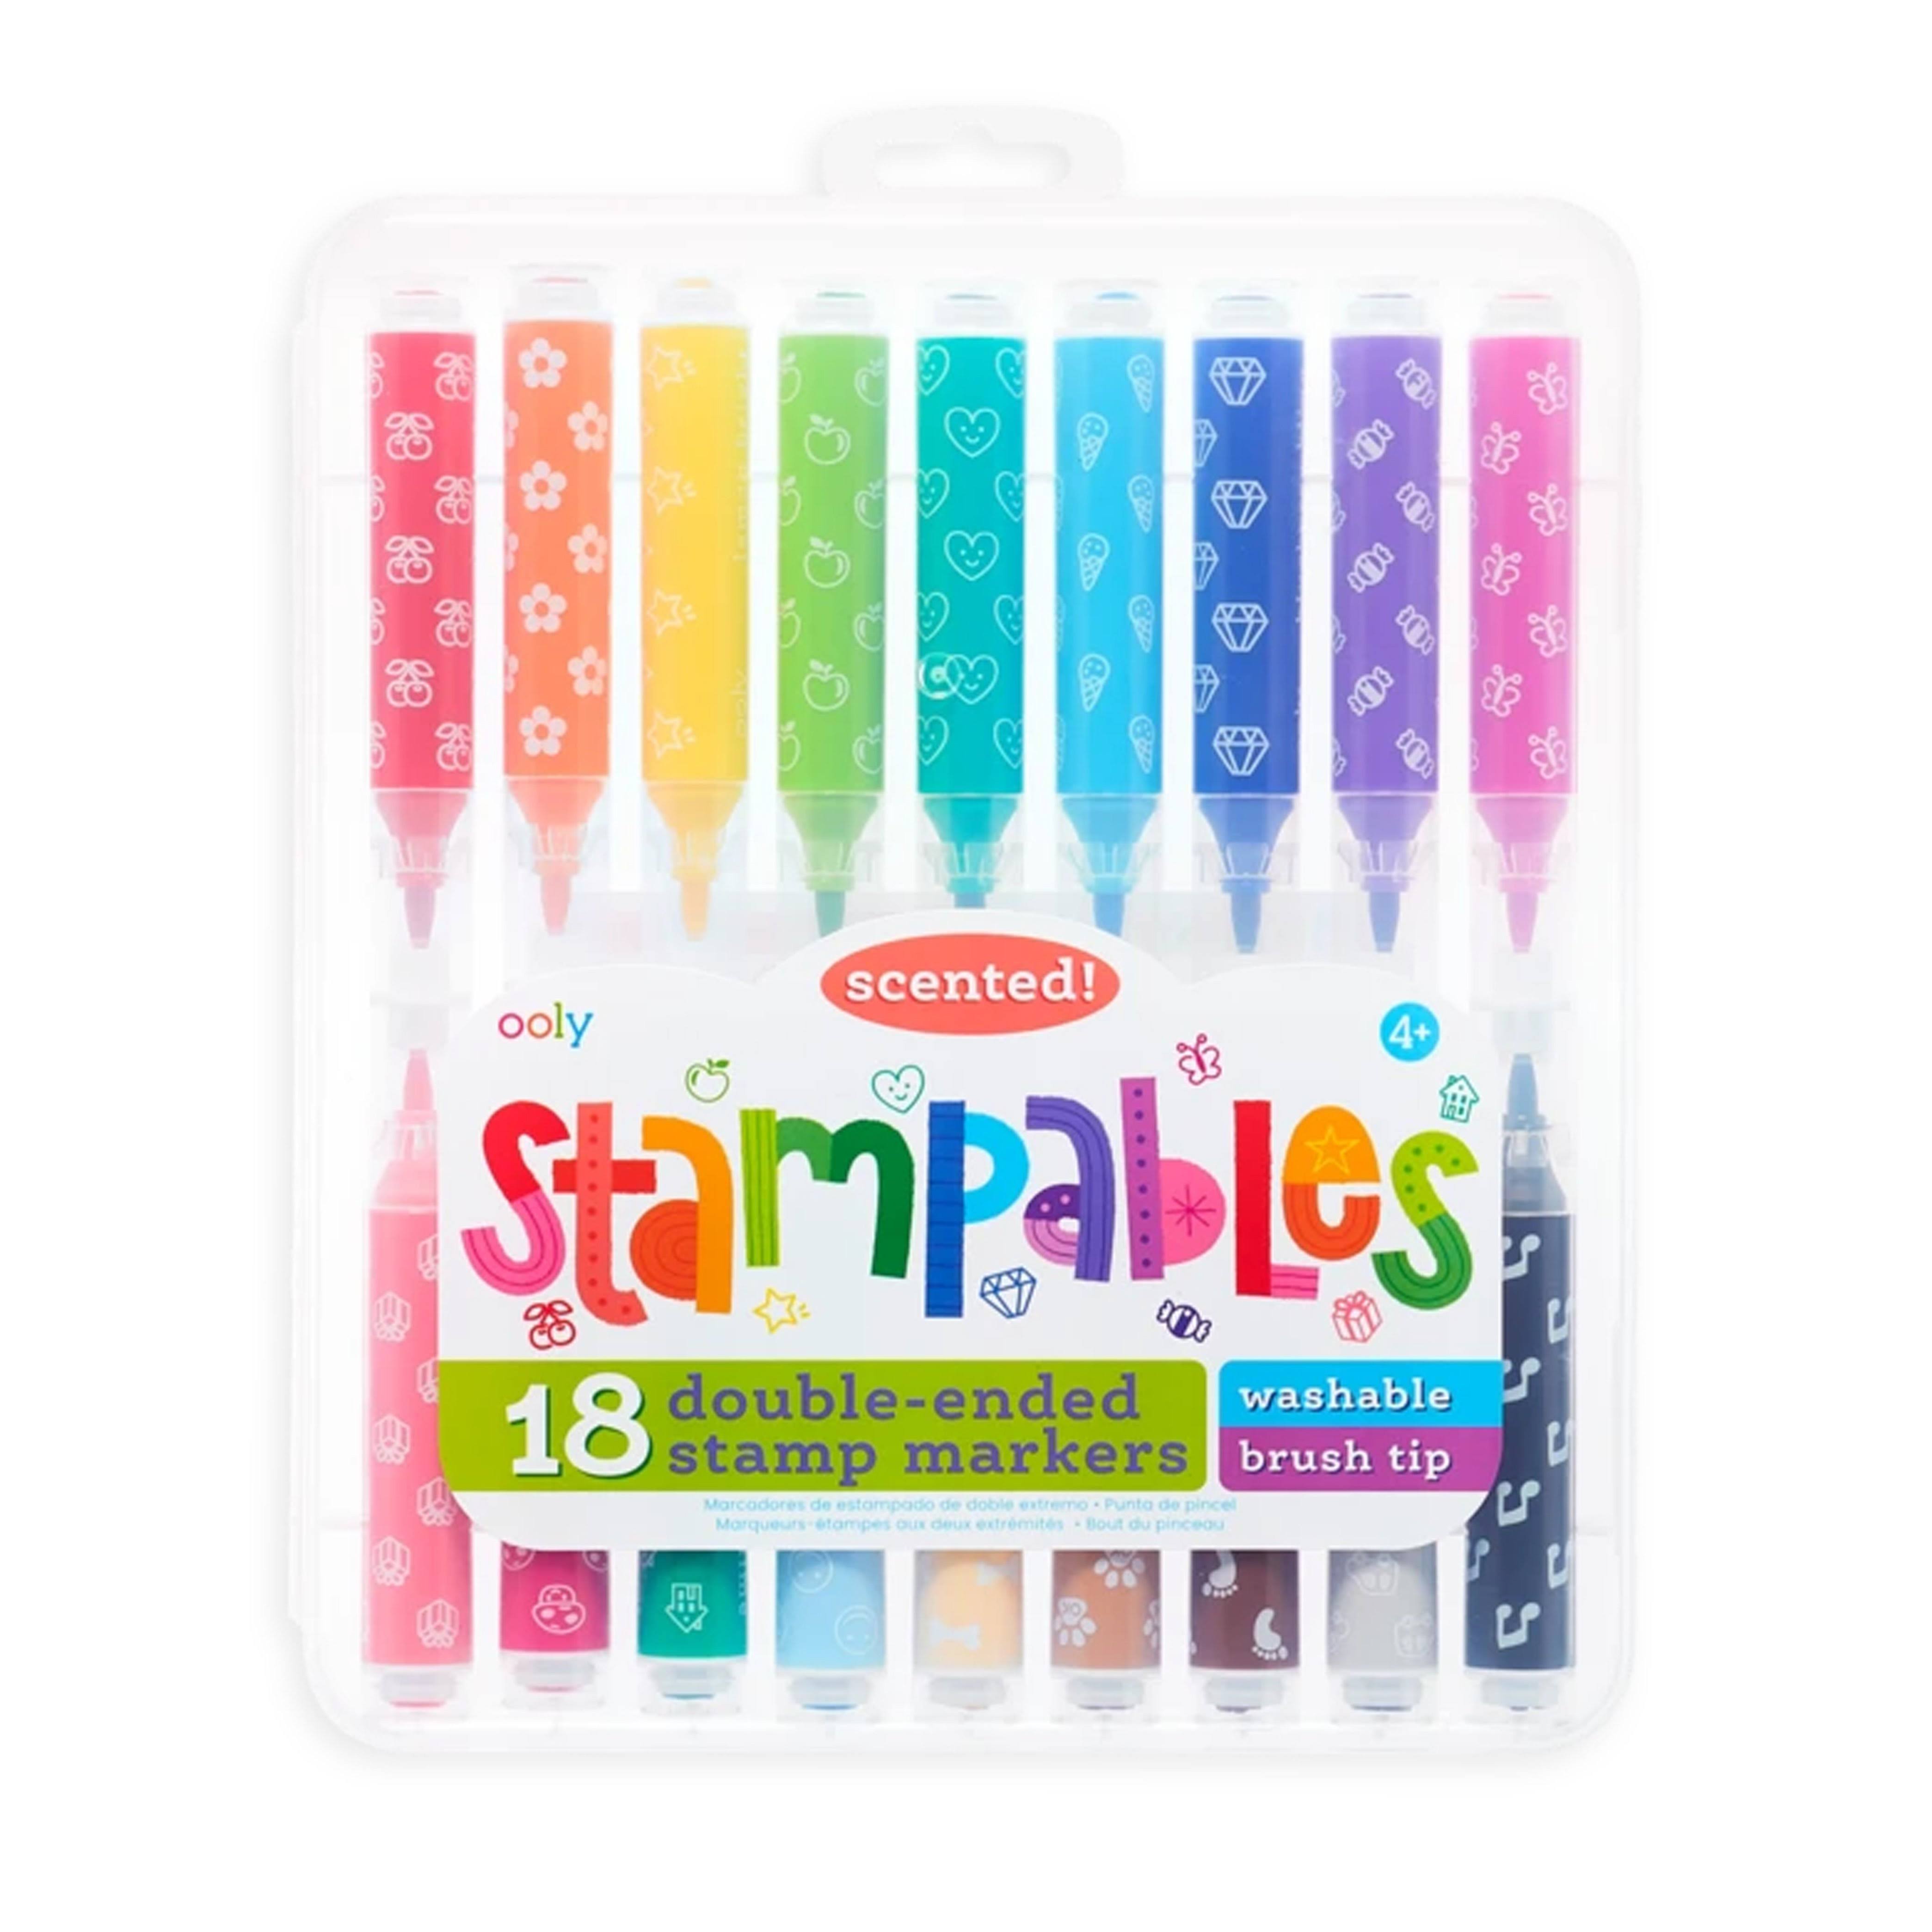 Ooly scented felt-tip pens with Stampables - BÉBÉ concept